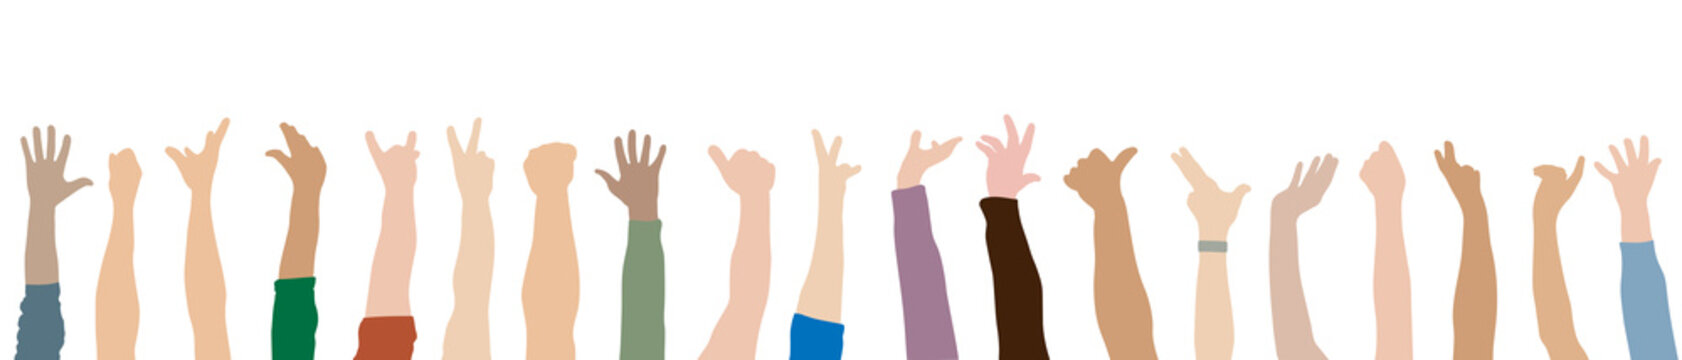 Cheering raised hands of multiethnic people. Fans, arm of men and women. Vector illustration